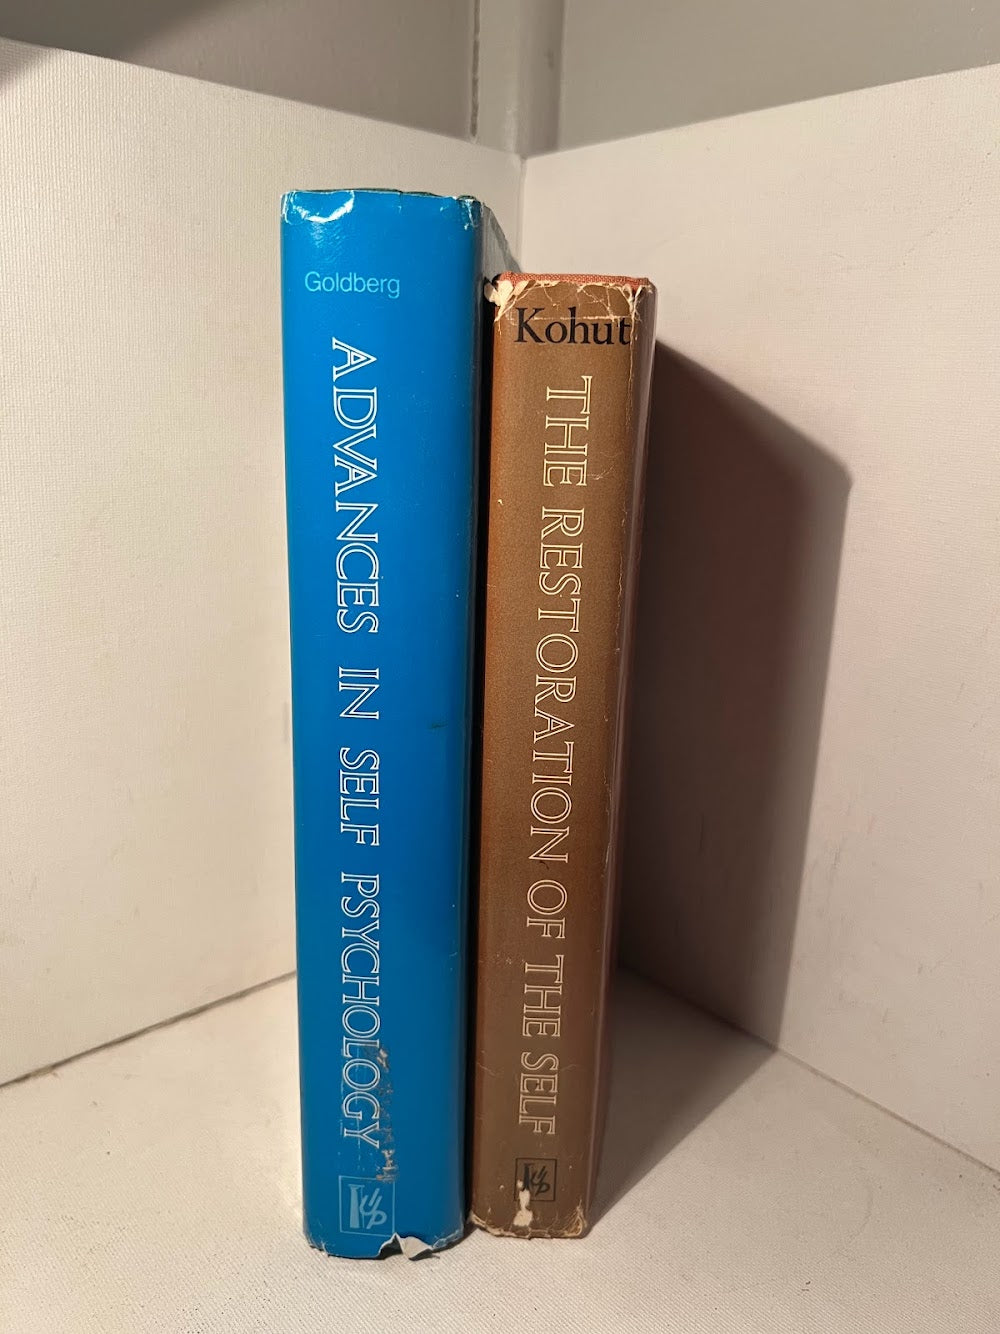 2 books on Self Psychology